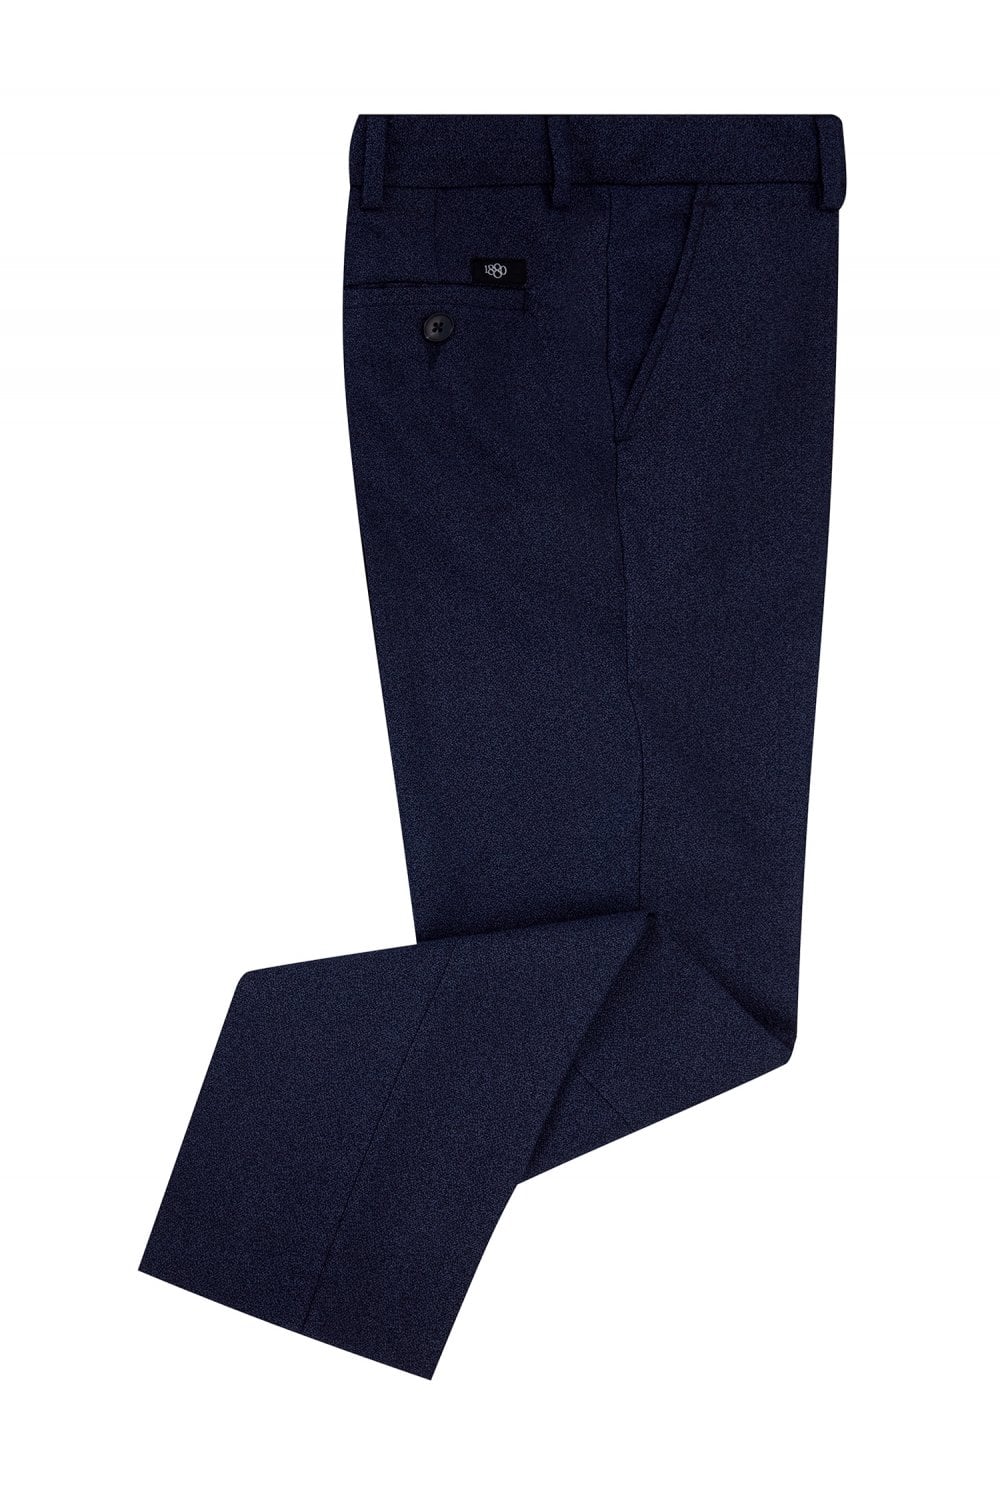 SALE 1880 Club Boys Formal Suit Trousers:- Dark Navy